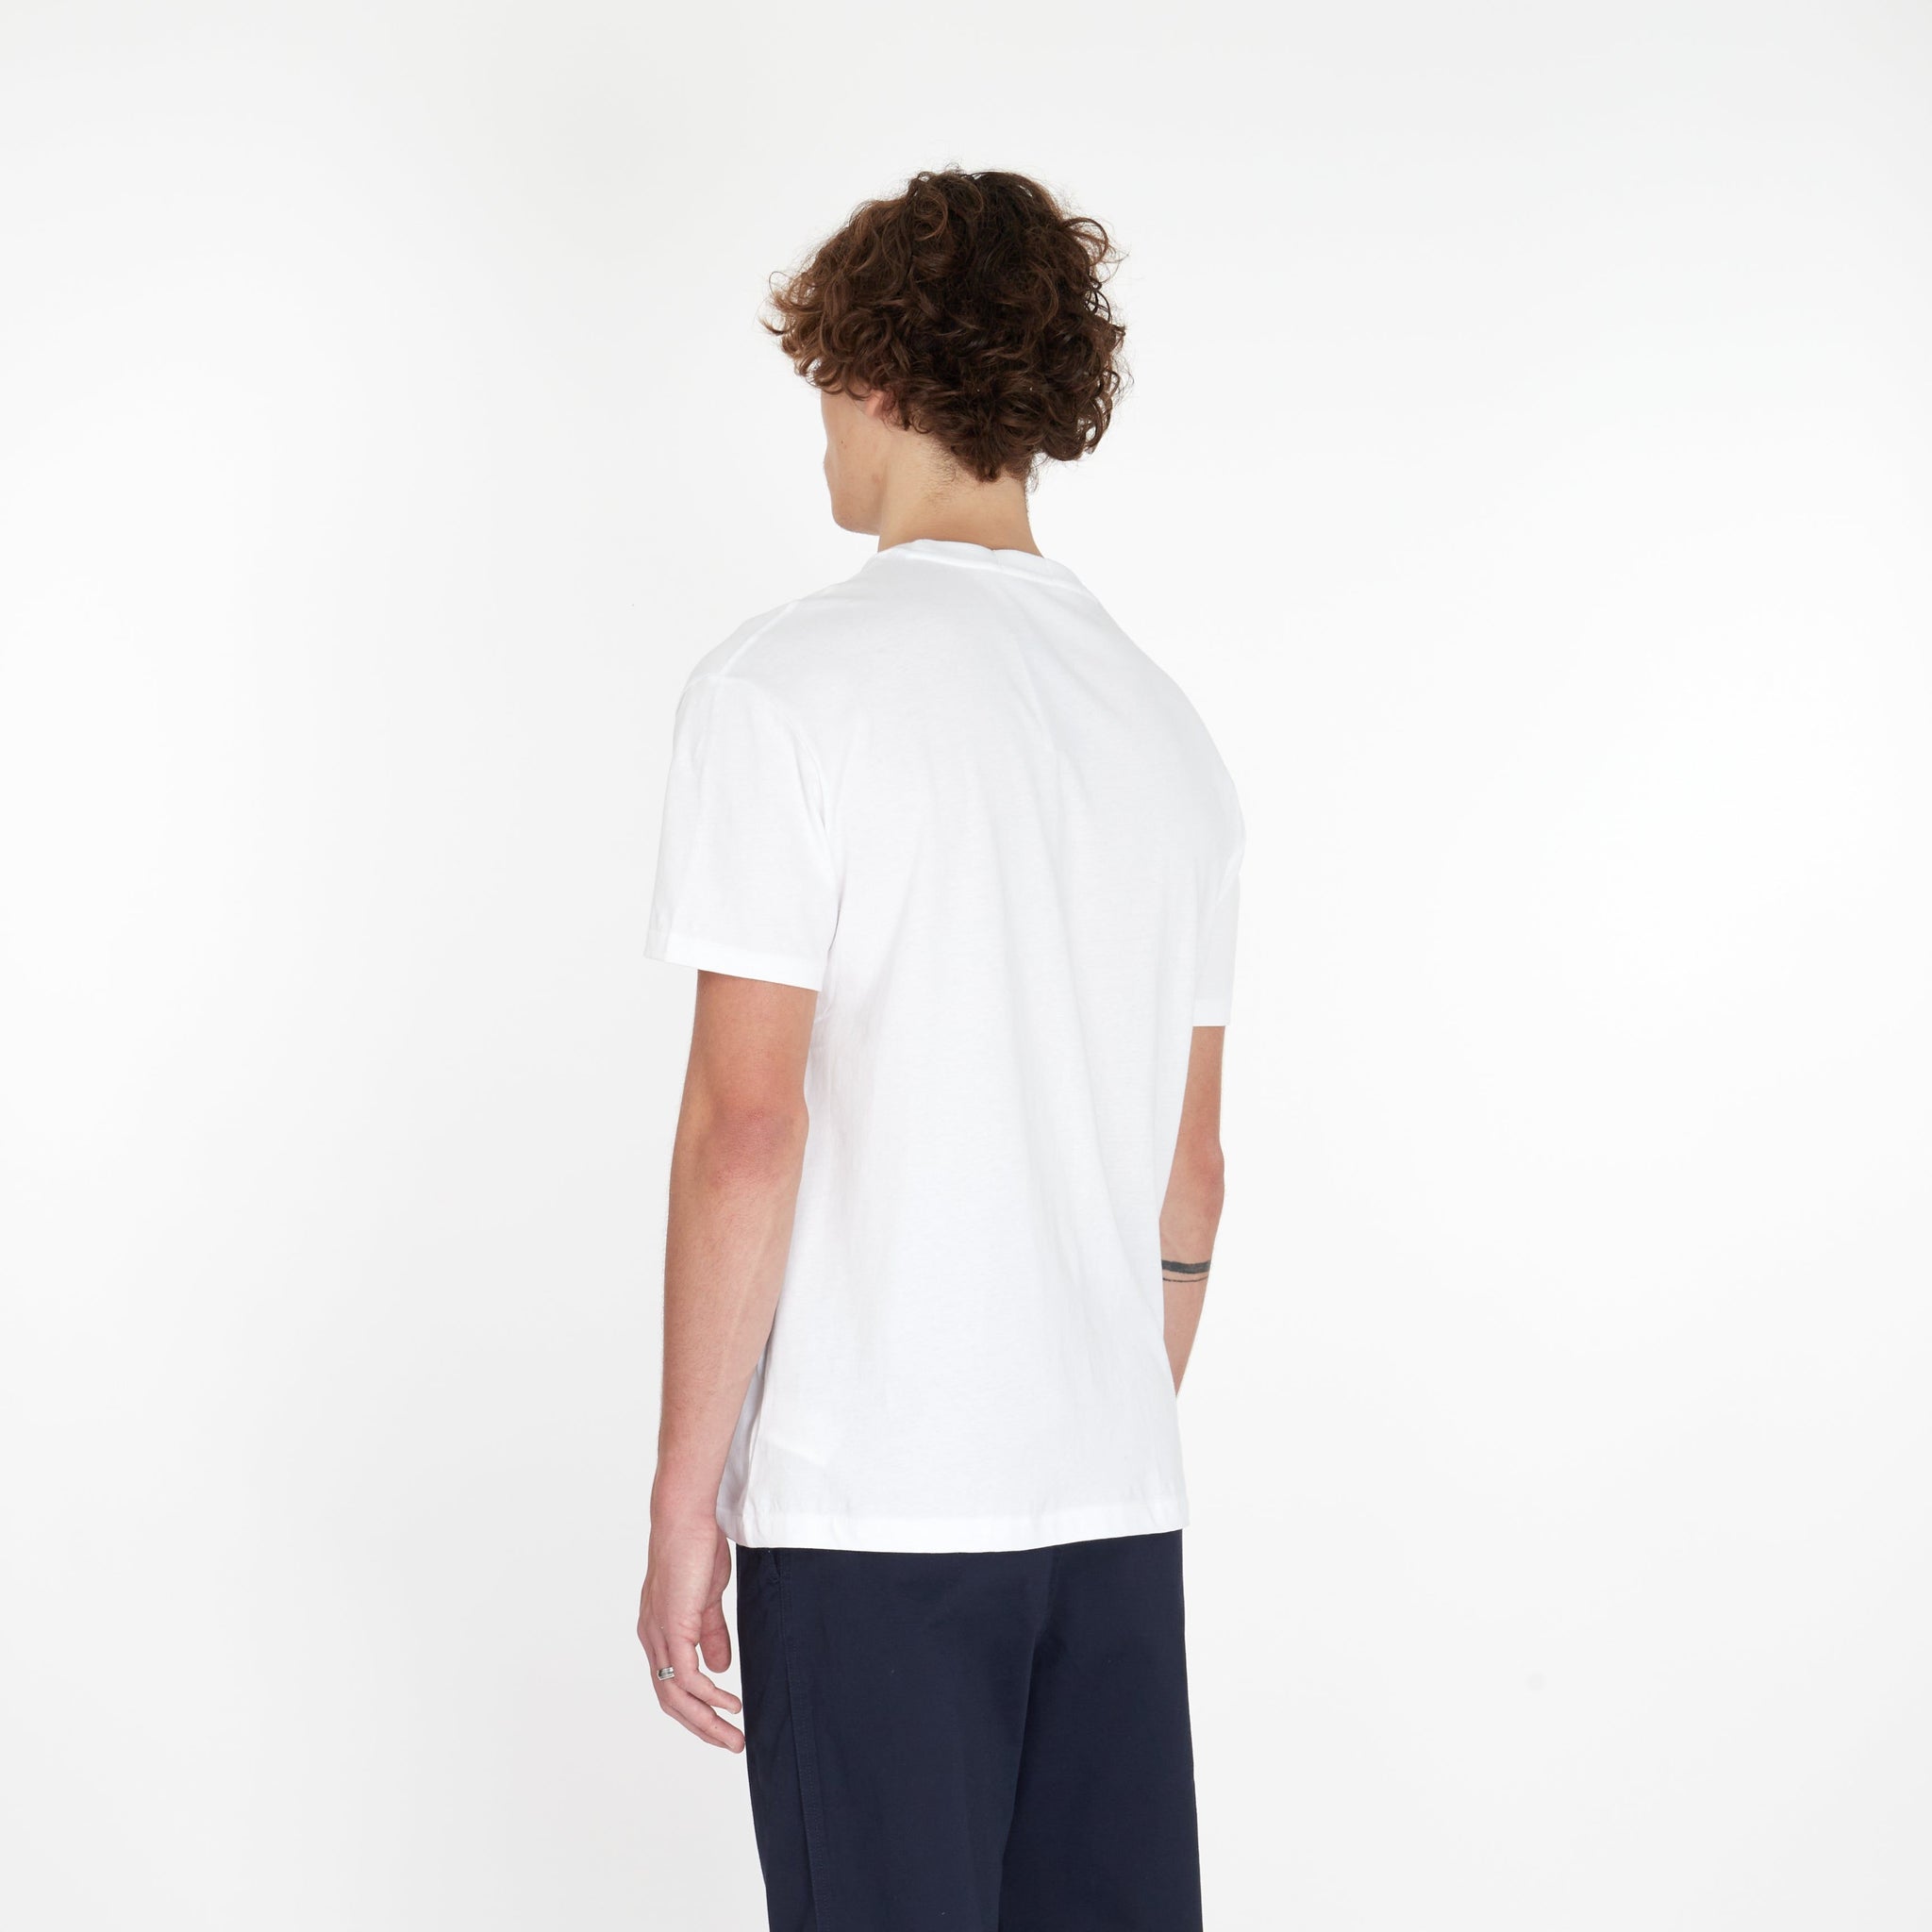 T-shirt Polo Blanc - Lesthete polo ralph lauren